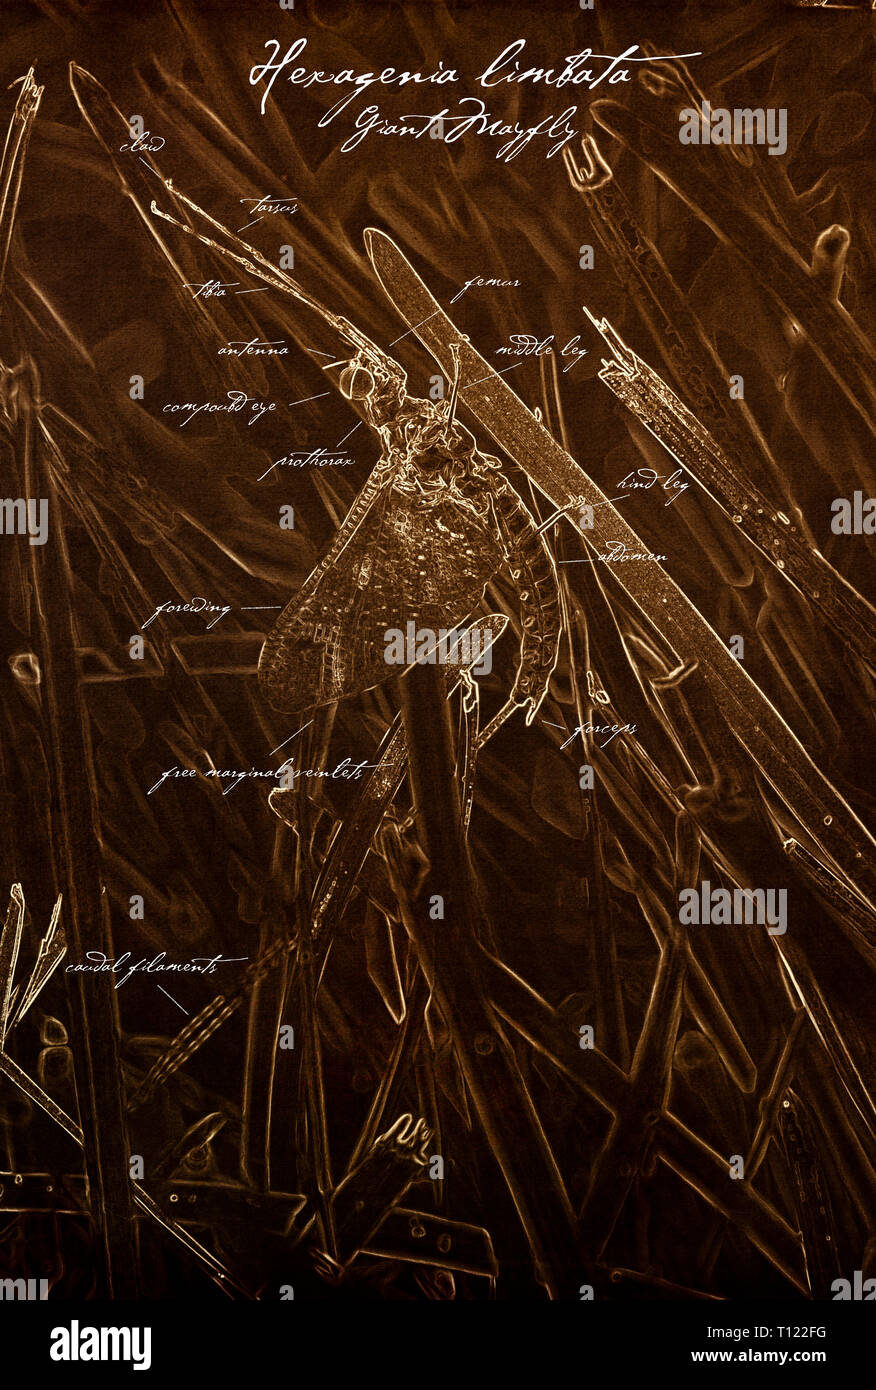 Giant Mayfly (Hexagenia limbata) Old Fashioned Anatomy Illustration in Sepia Stock Photo